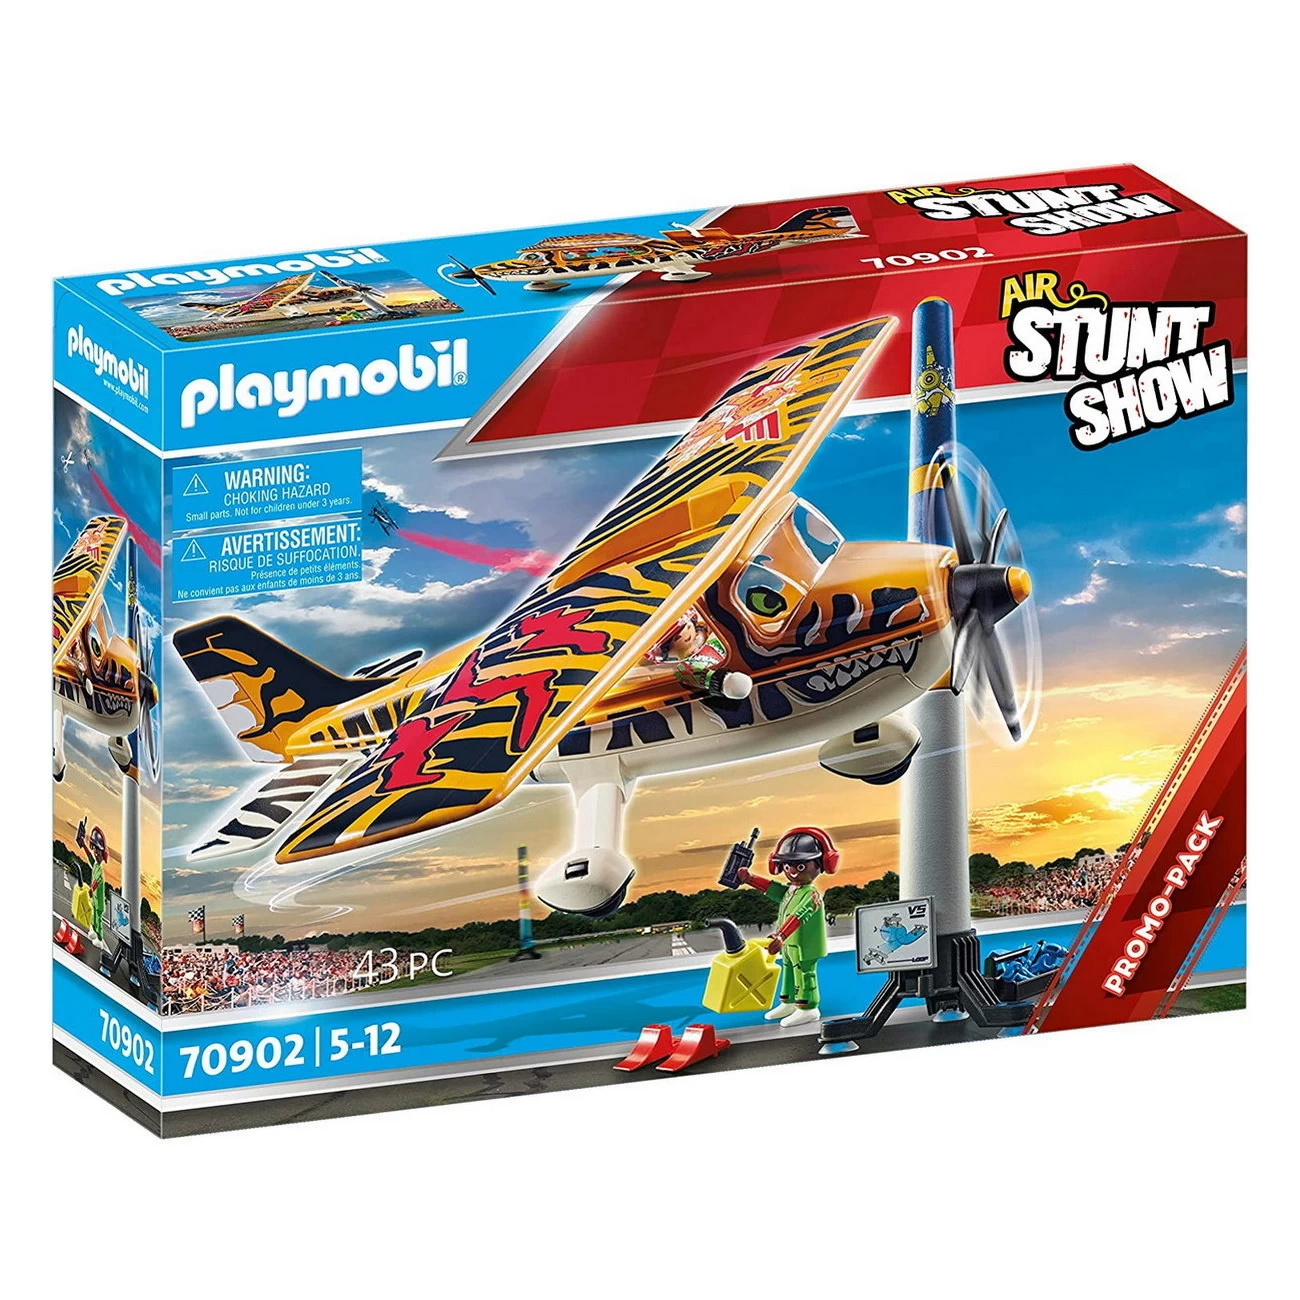 Playmobil 70902 - Propellerflugzeug Tiger - Air Stuntshow